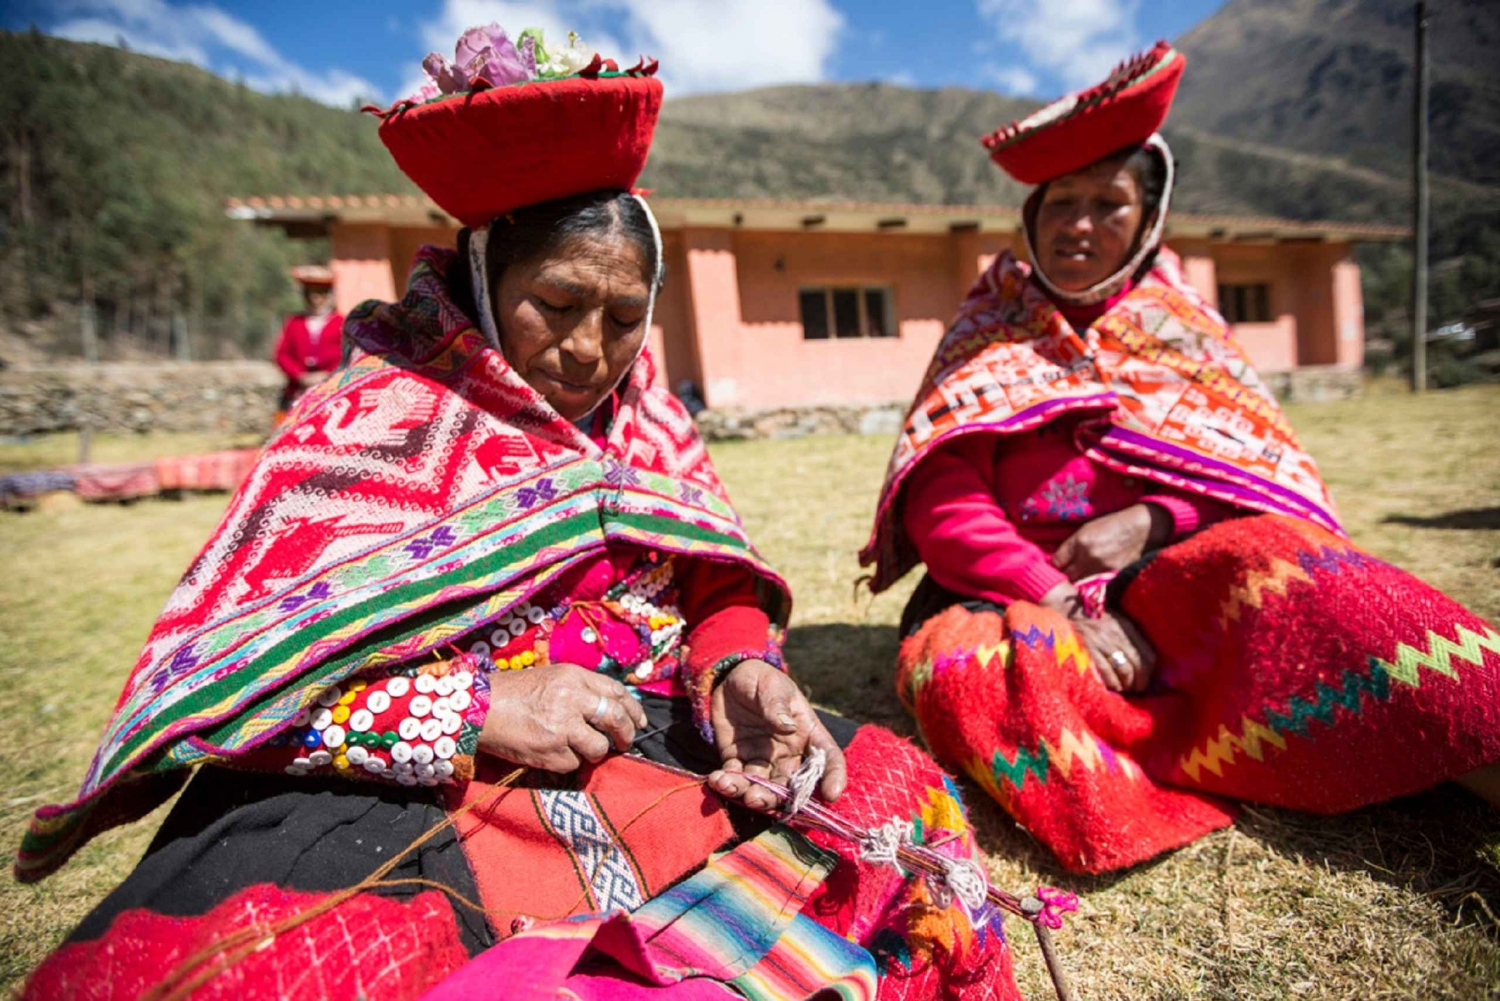 From Cusco: Full-Day to Huilloc, Pumamarca, & Ollantaytambo